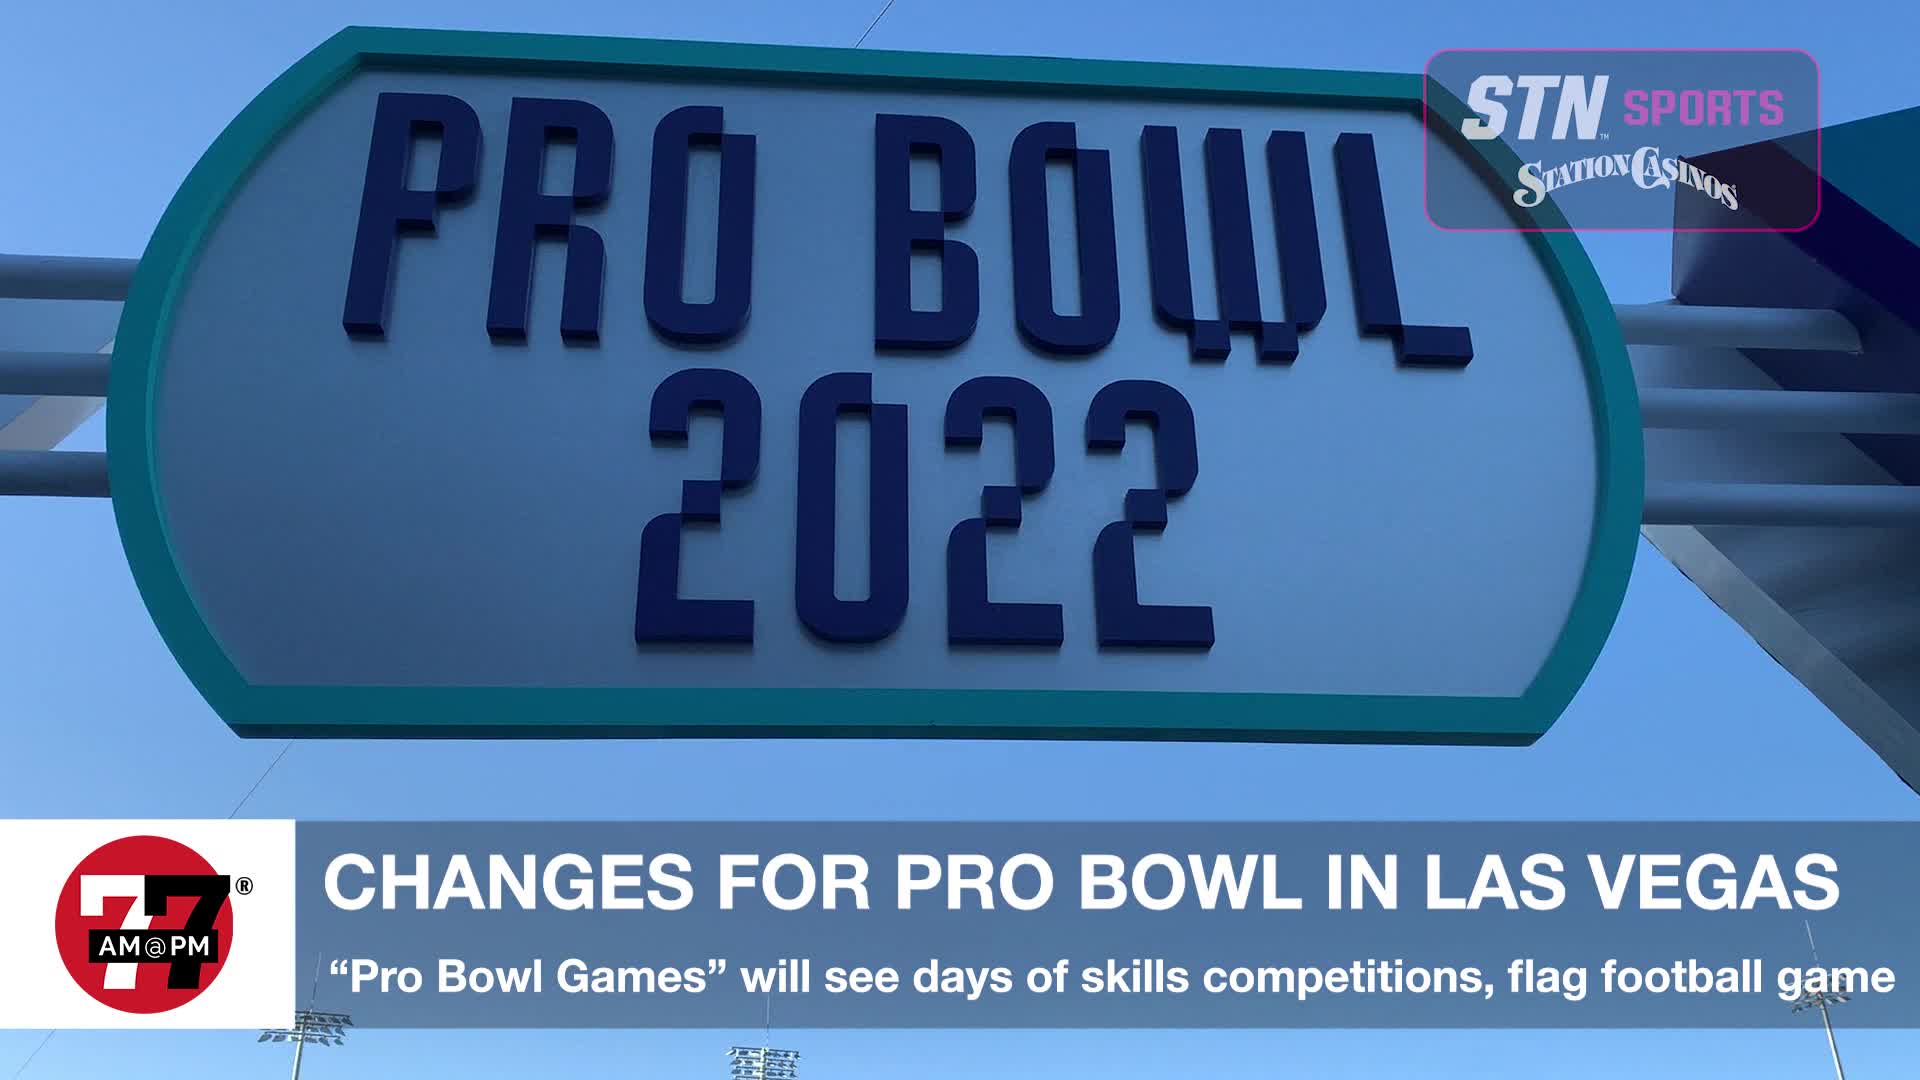 Major changes for Pro Bowl in Las Vegas